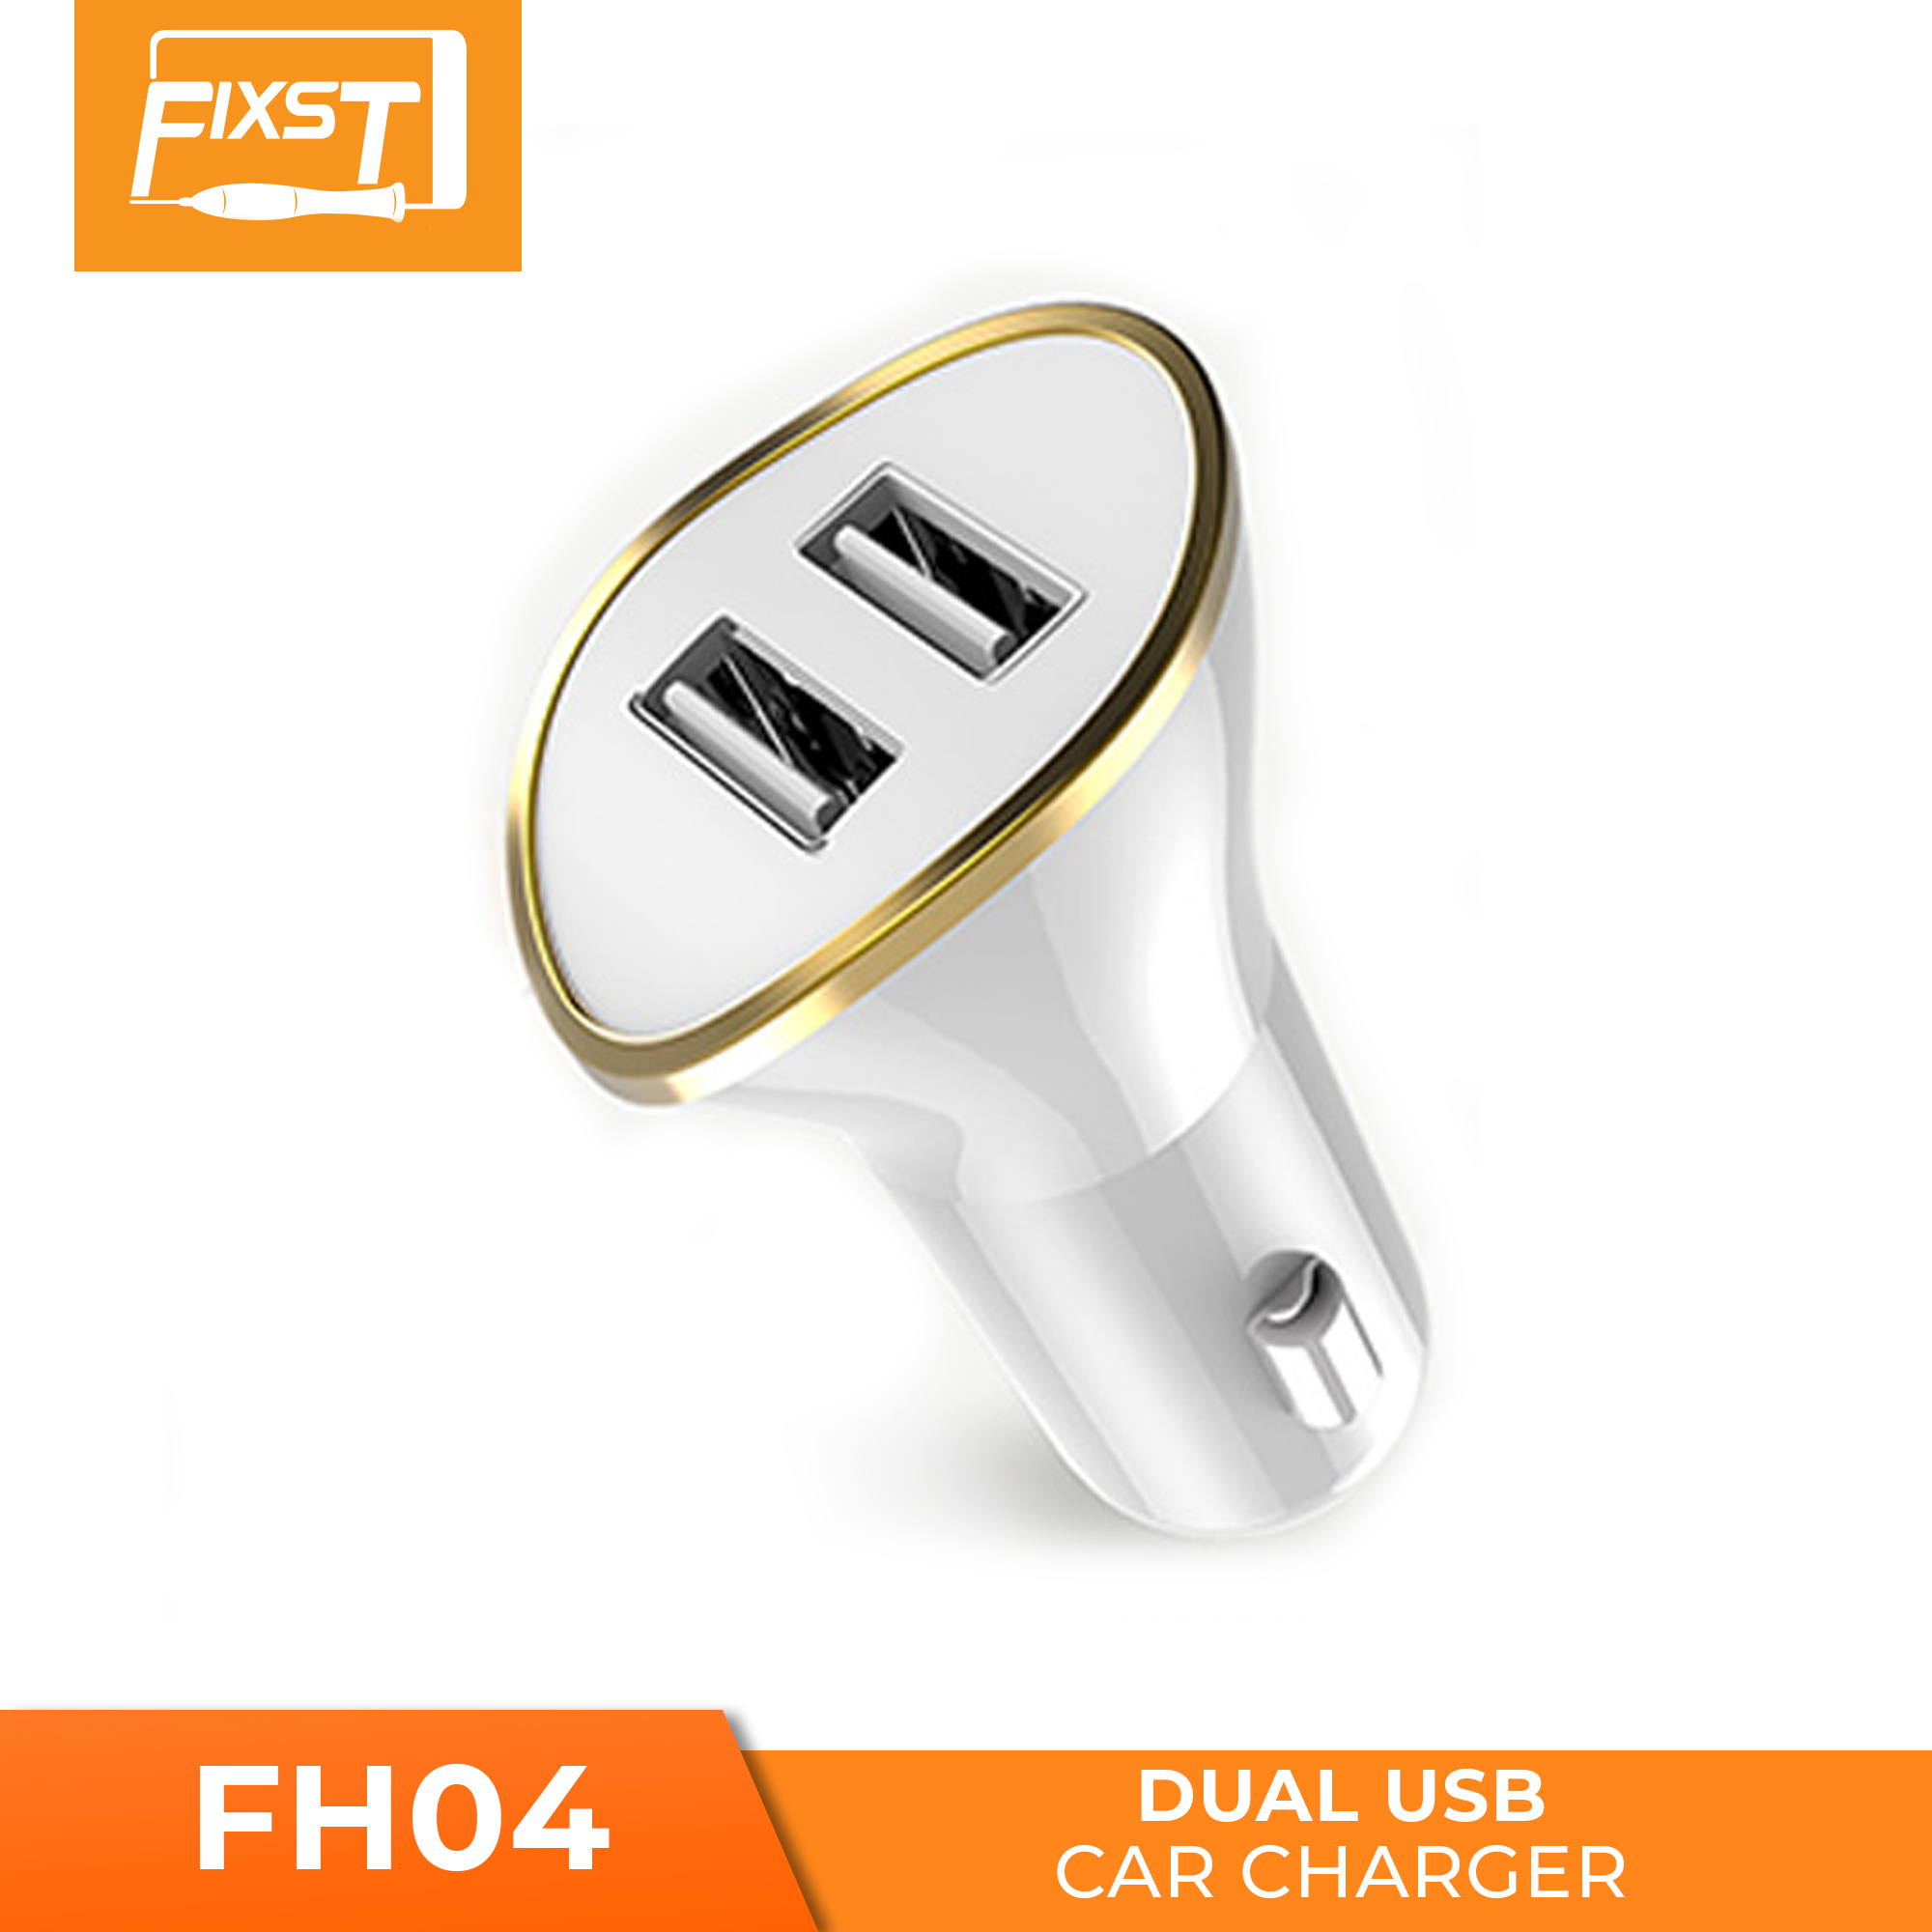 FH04 Dual USB 2.4A Car Charger